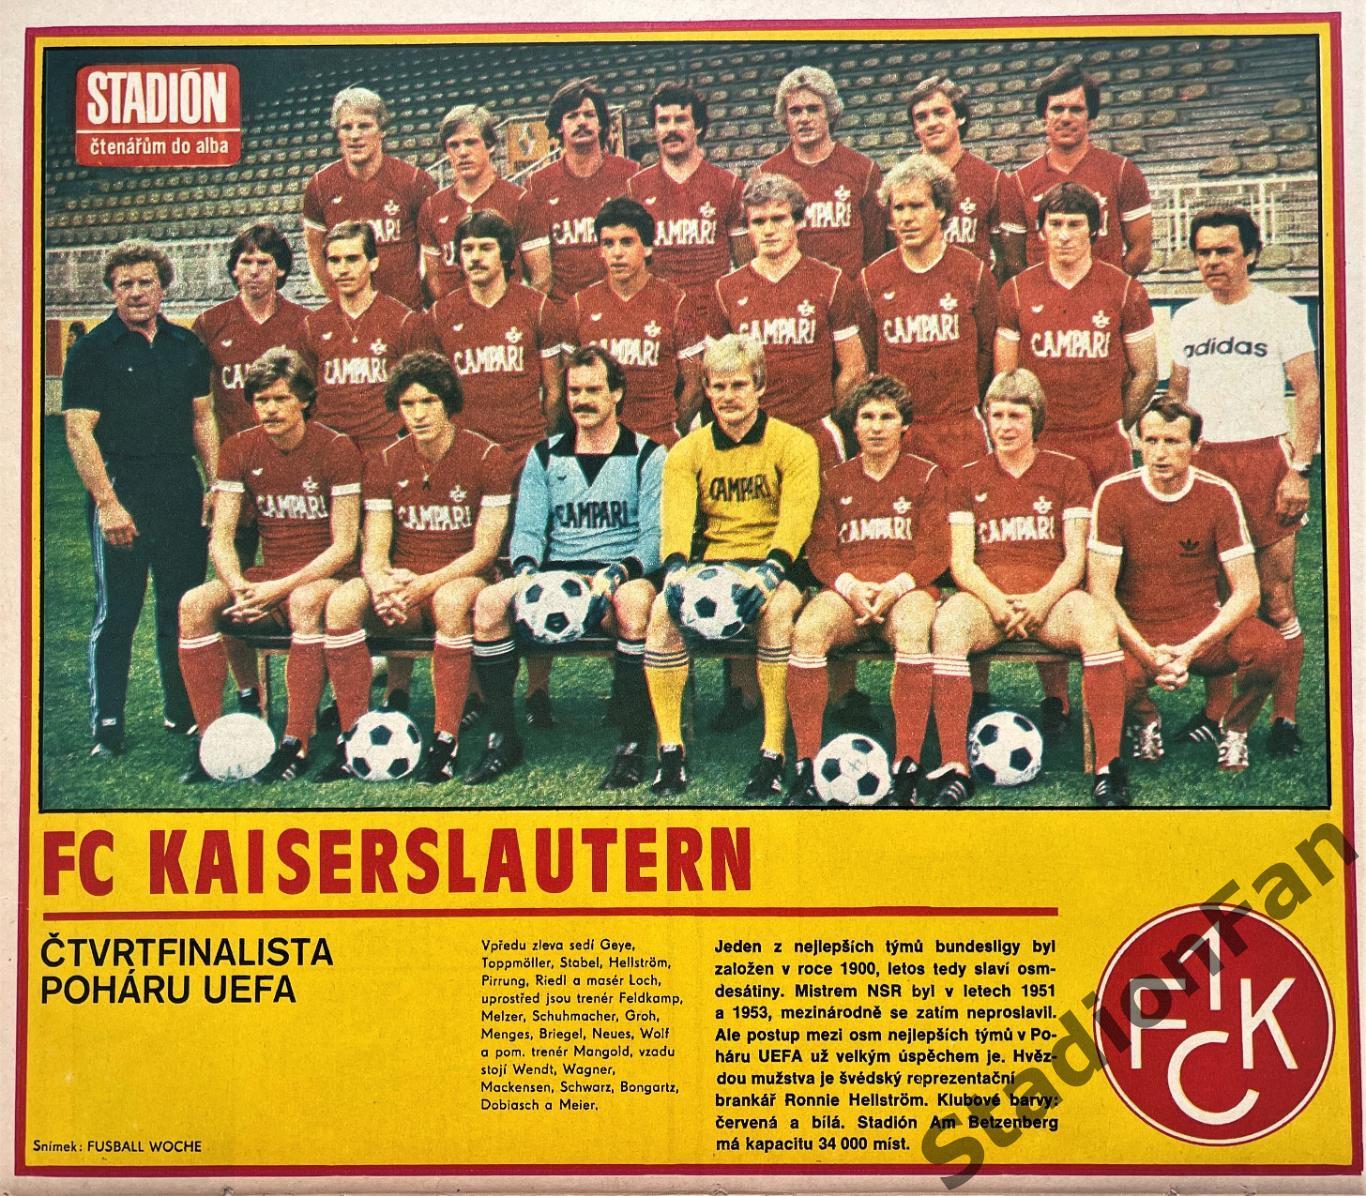 Постер из журнала Стадион (Stadion) - Kaiserslautern, 1980.